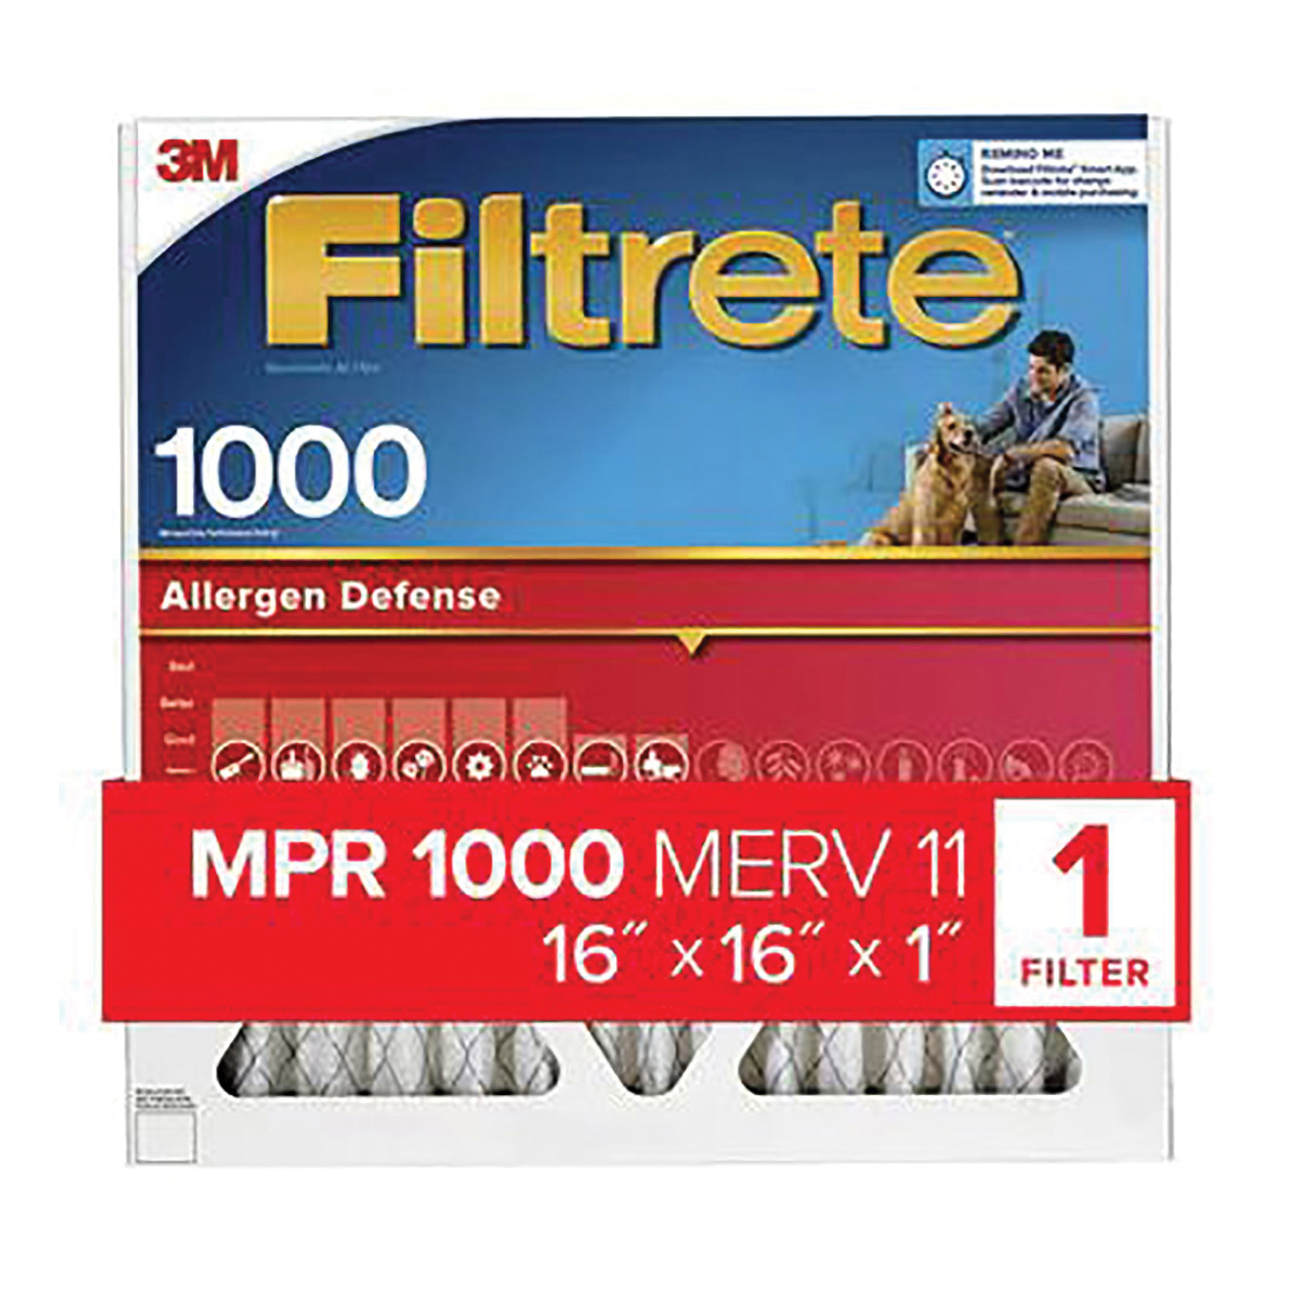 AL16-4 Air Filter, 16 x 16 x 1, 11 MERV, 1000 MPR, Polypropylene Frame